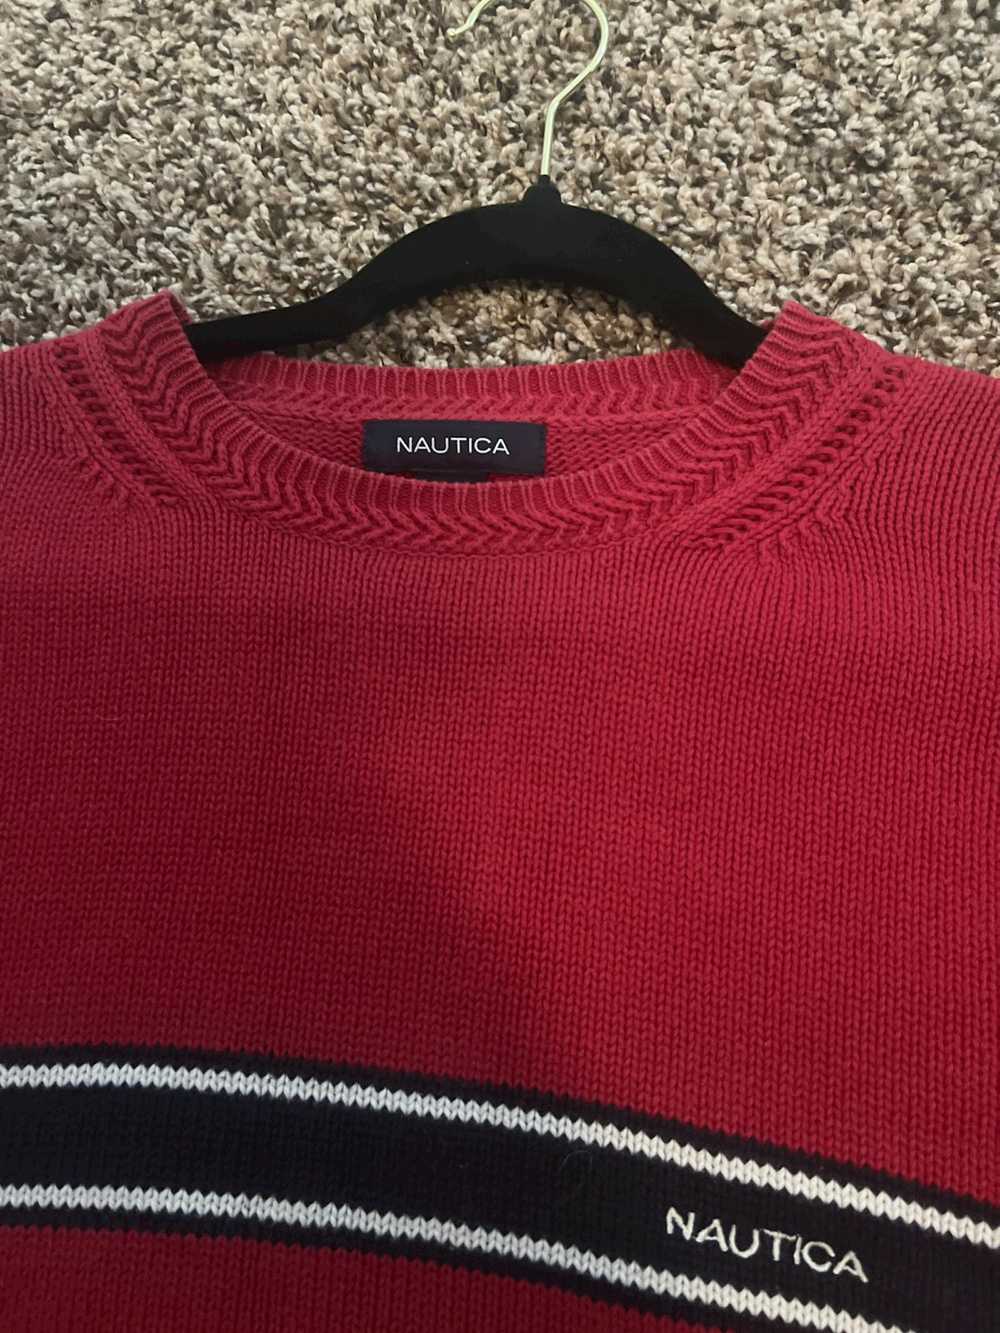 Nautica Red stripped nautica sweater - image 2